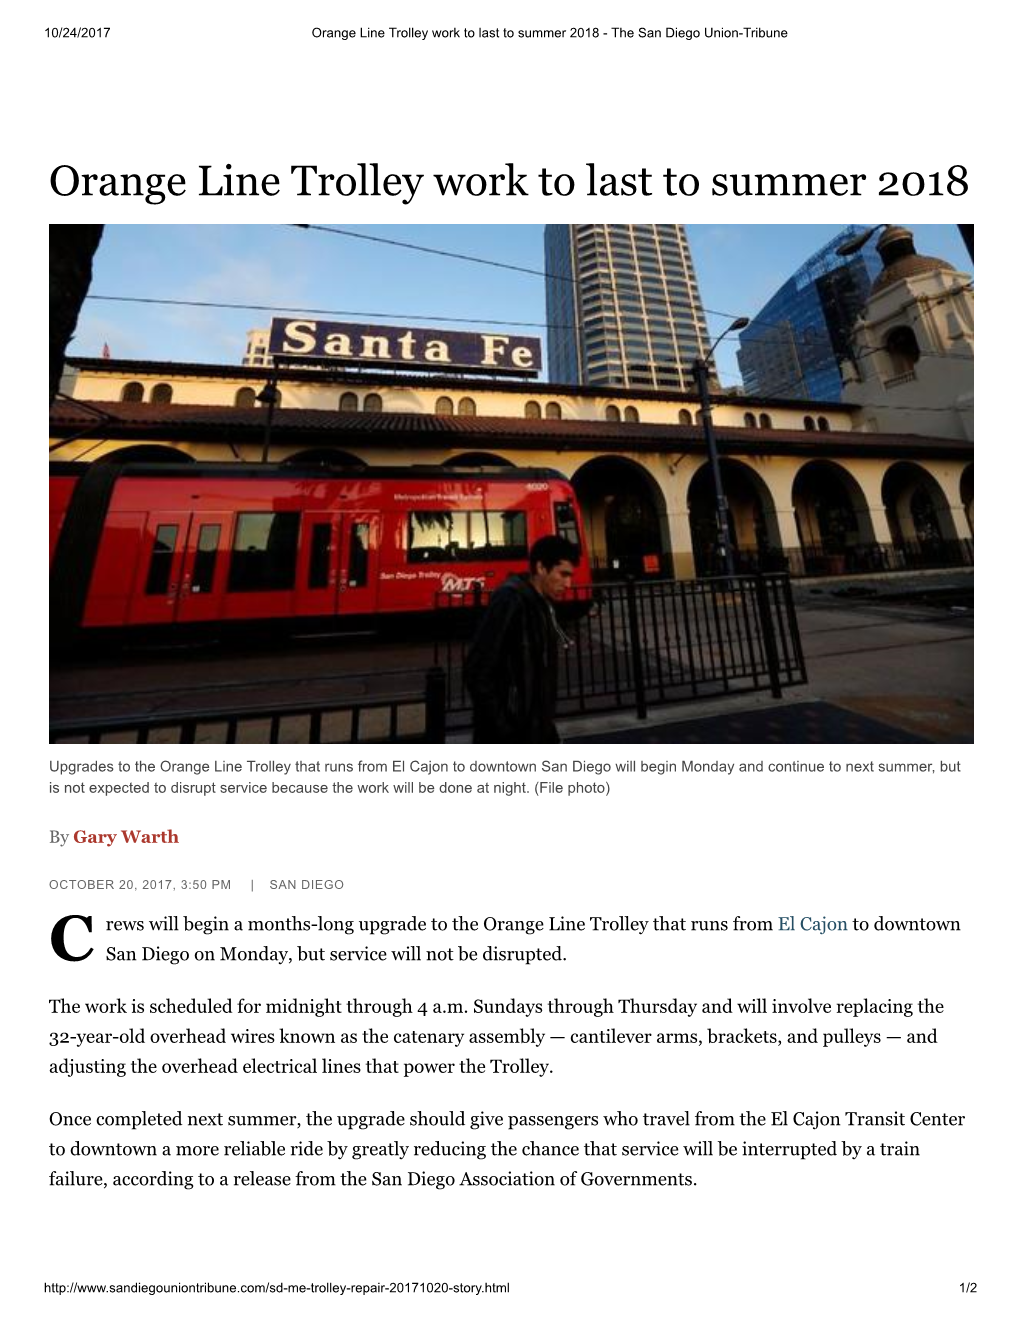 Orange Line Trolley Work to Last to Summer 2018 - the San Diego Union-Tribune